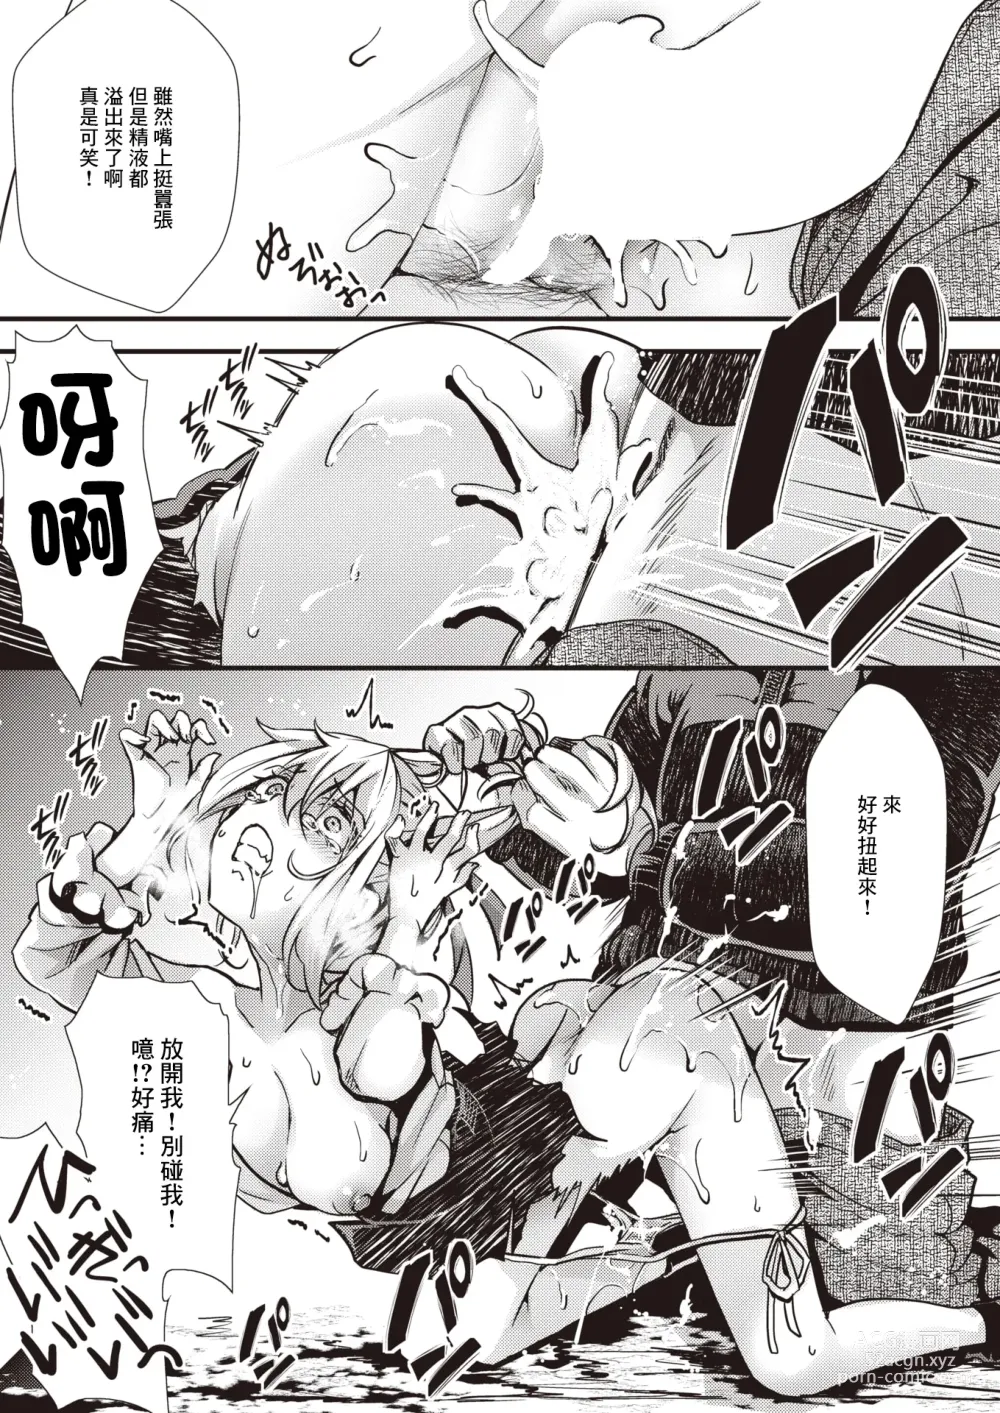 Page 5 of manga Itadaki Joou Mimi-chan vs Kouen Sumi Oji Rengou